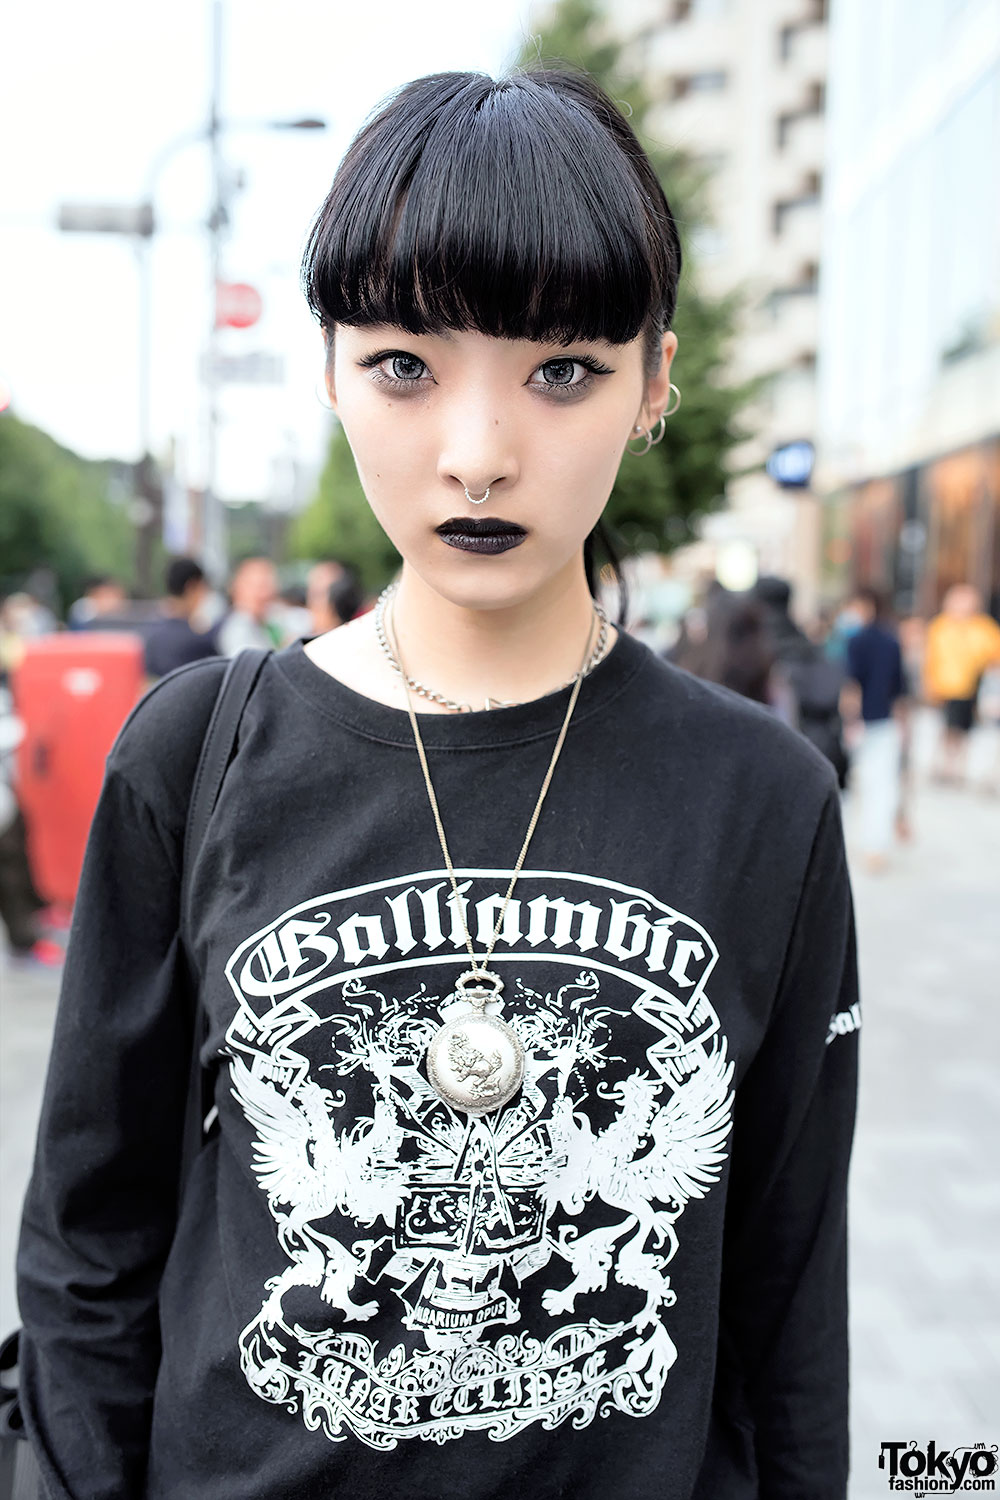 Black Lipstick, Nose Ring, Dark Fashion & Chain Creepers in Harajuku